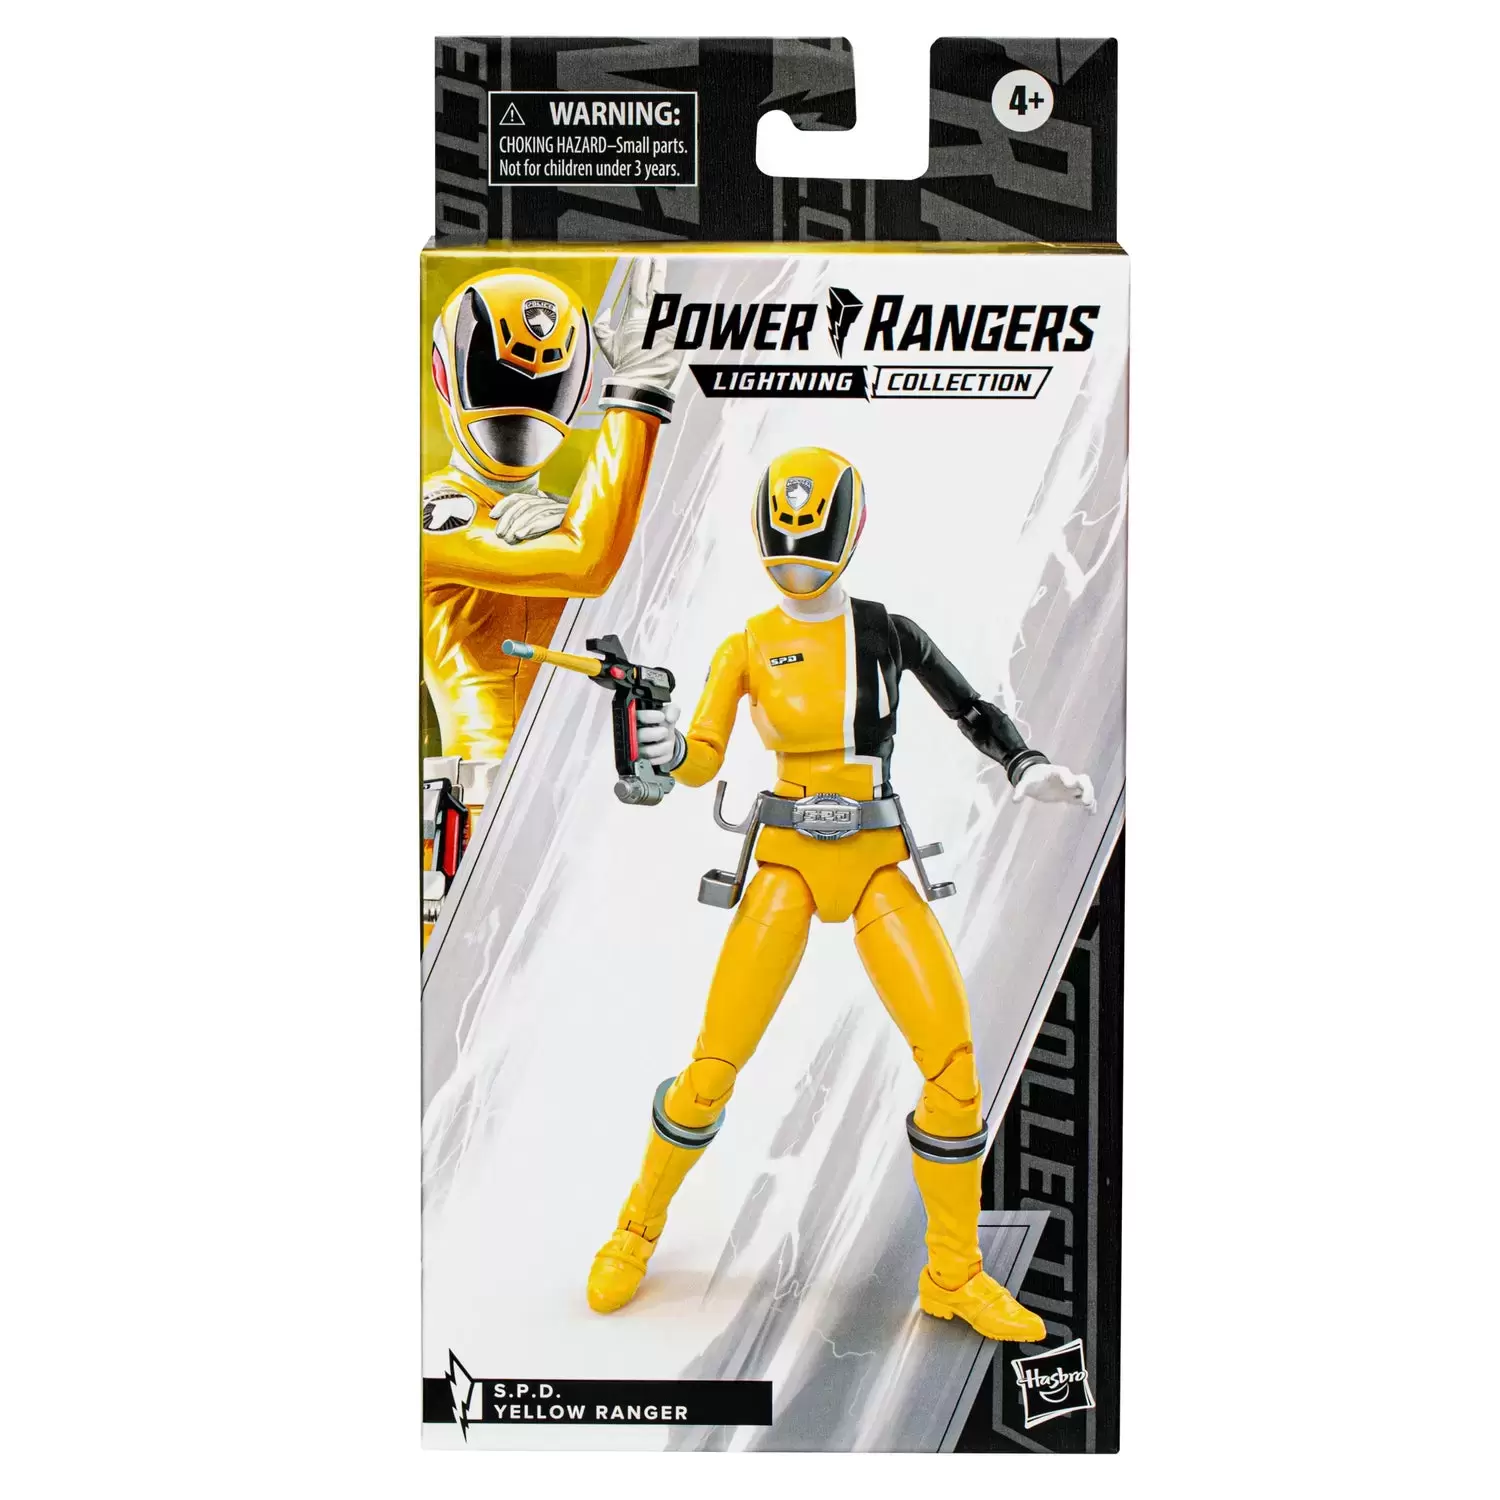 Power Rangers Hasbro - Lightning Collection - S.P.D. Yellow Ranger